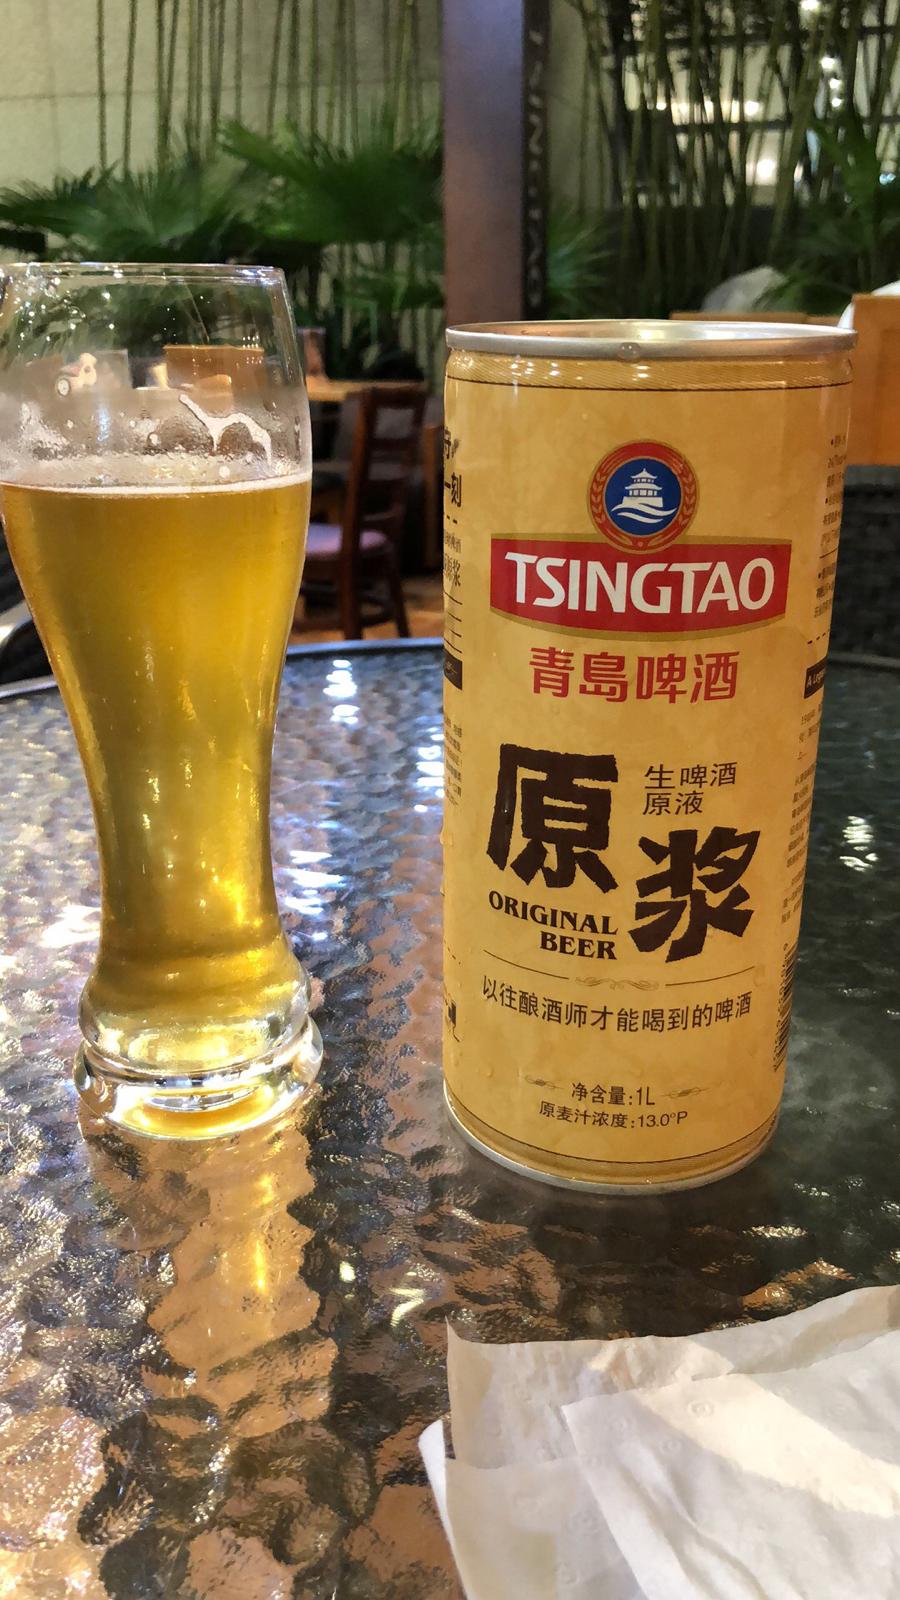 Yuan Jiang (Pure) Original Beer